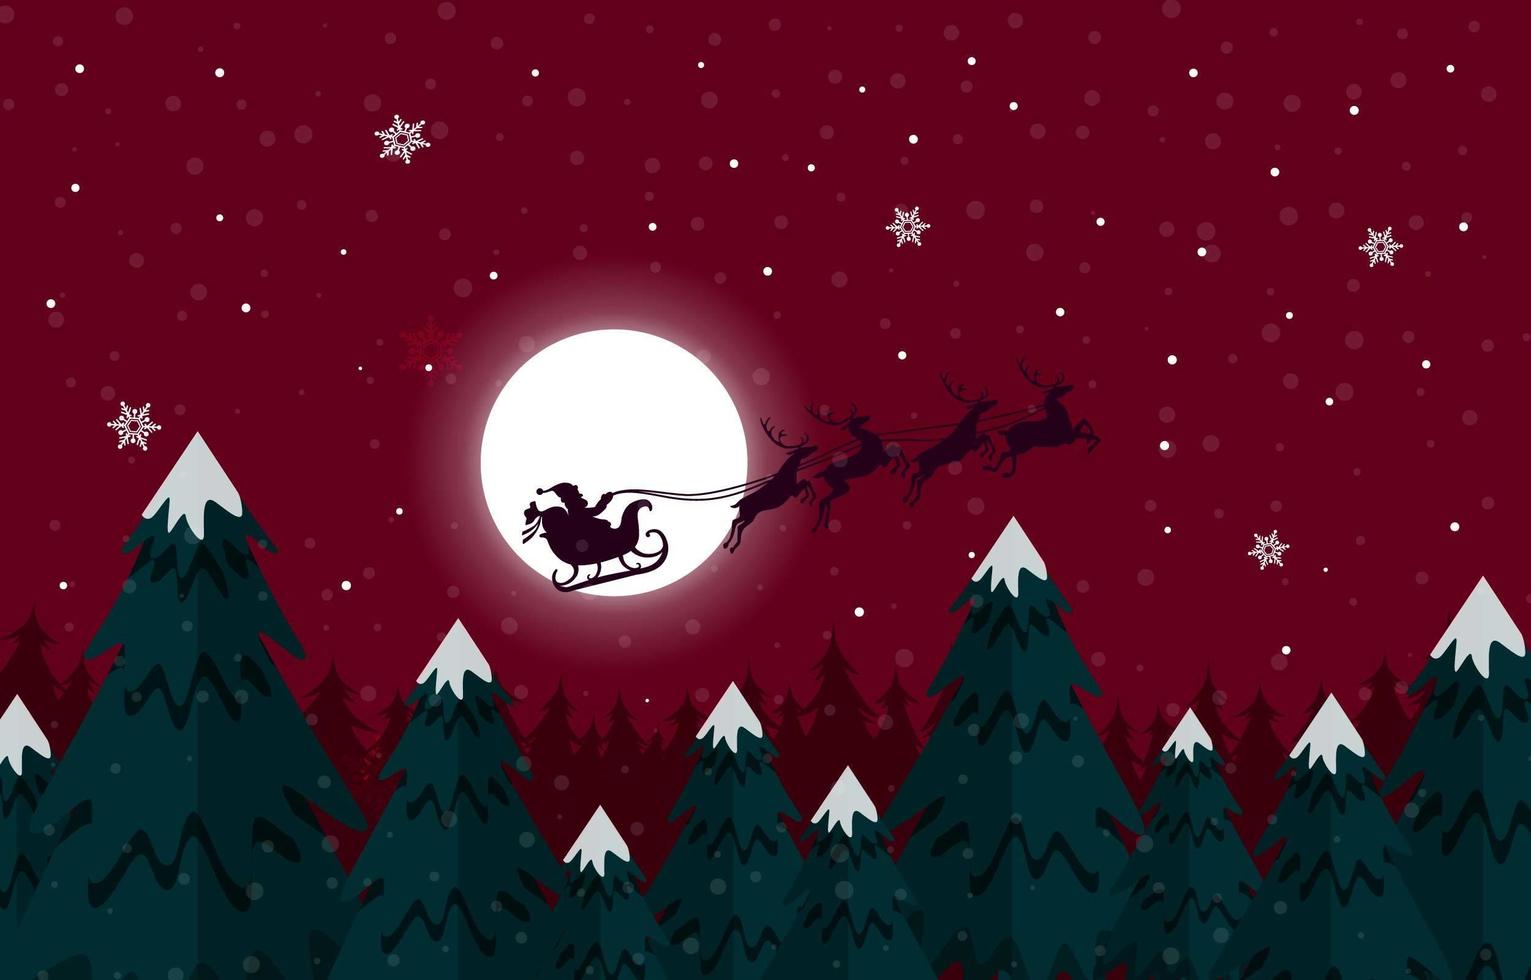 Santa and His Reindeer at Snowy Christmas Night vector